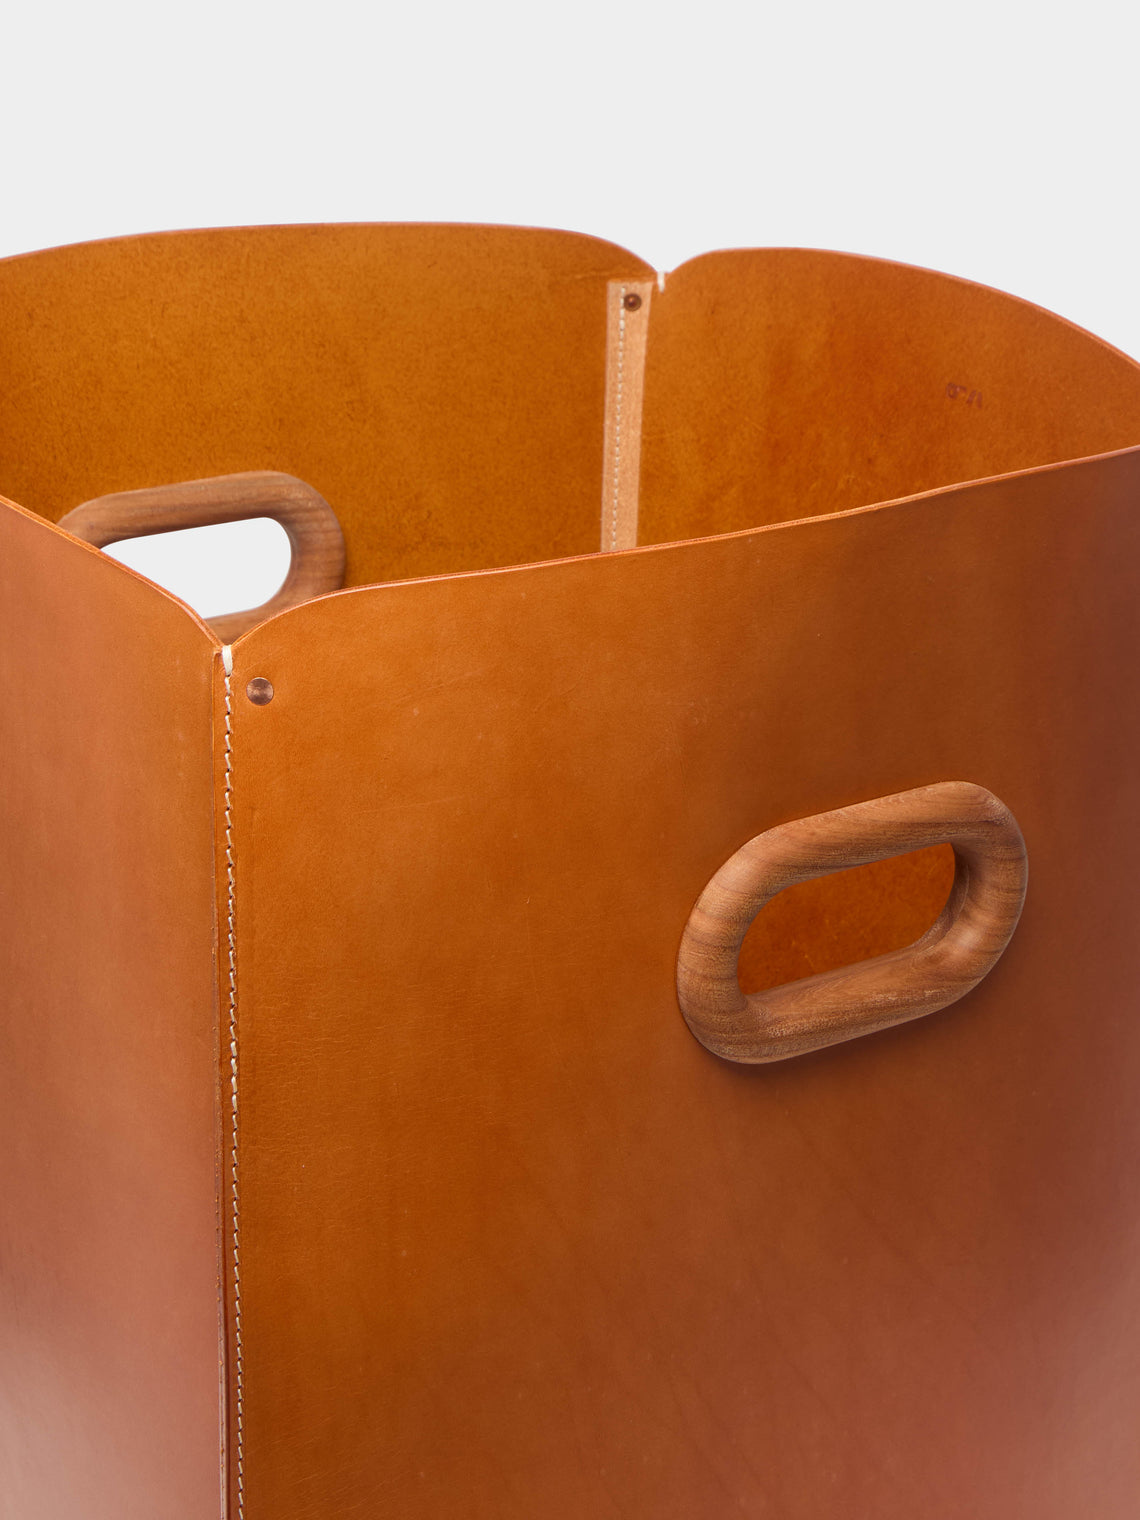 Otis Ingrams - Ample Leather Small Storage Basket -  - ABASK